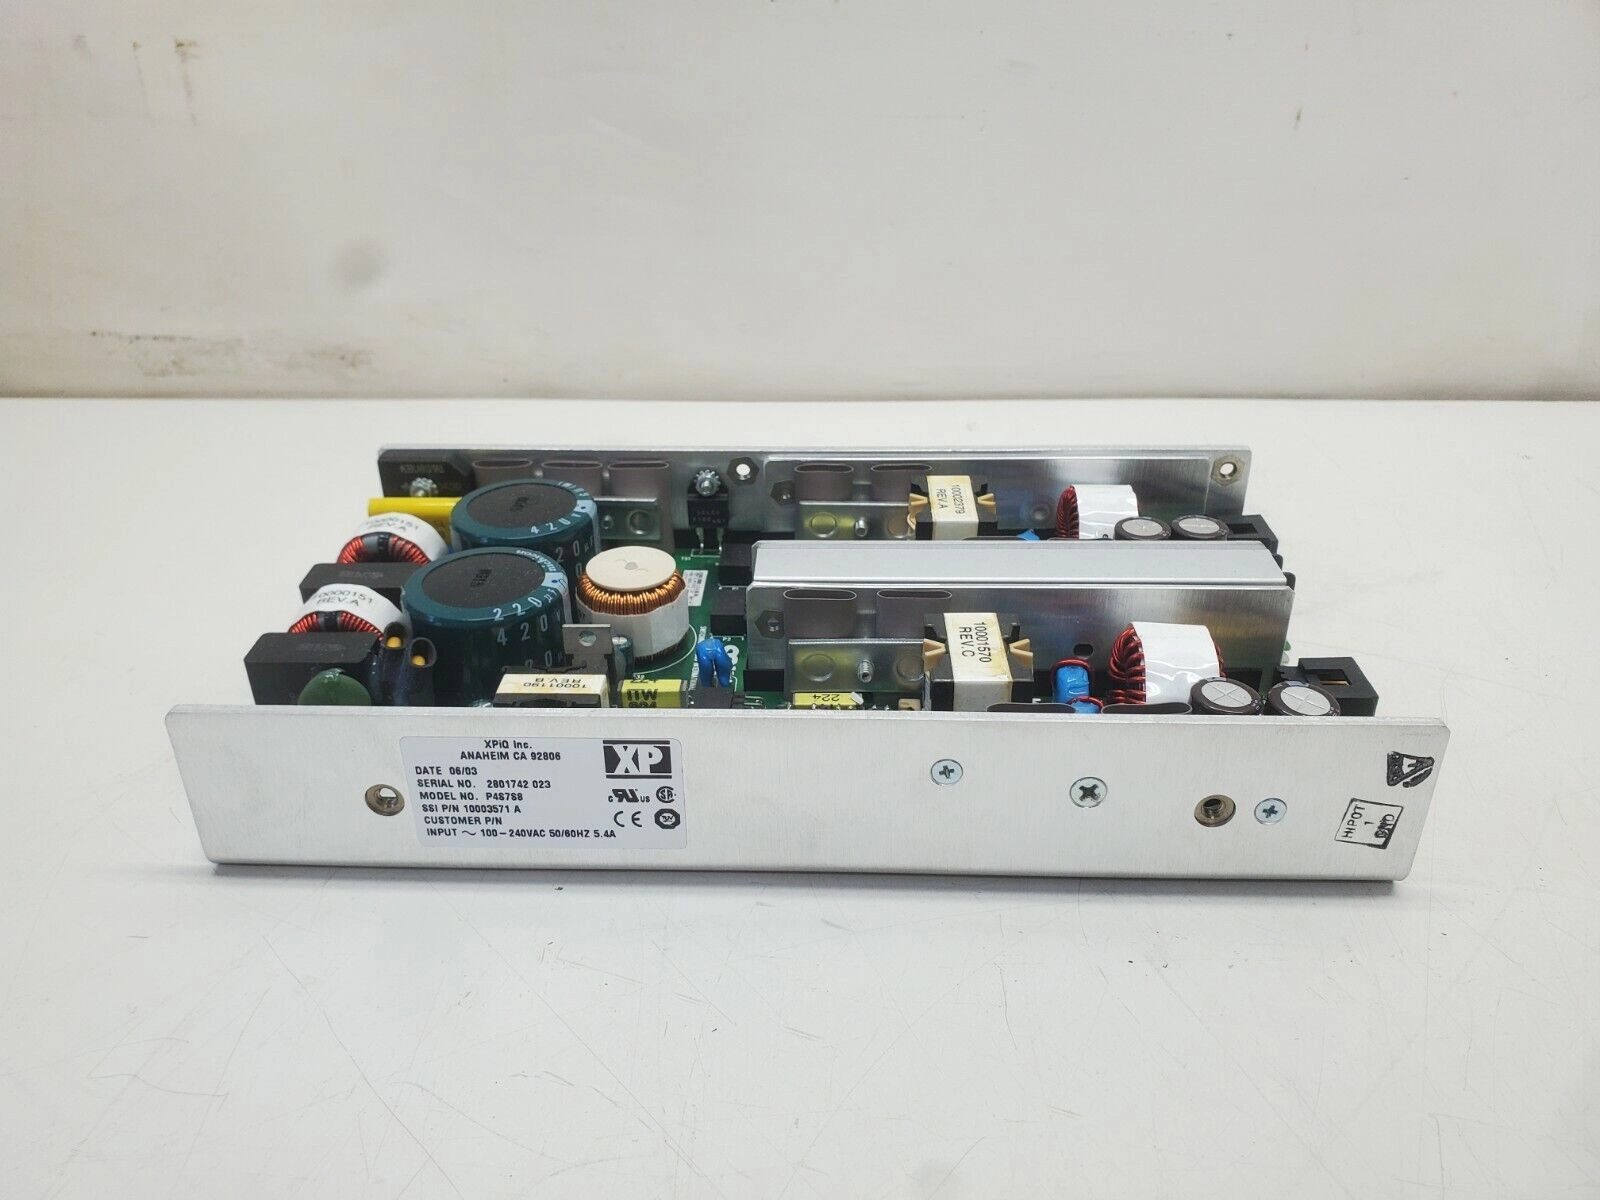 XPiQ P4S7S8 Power Supply Module from Thermo Finnig